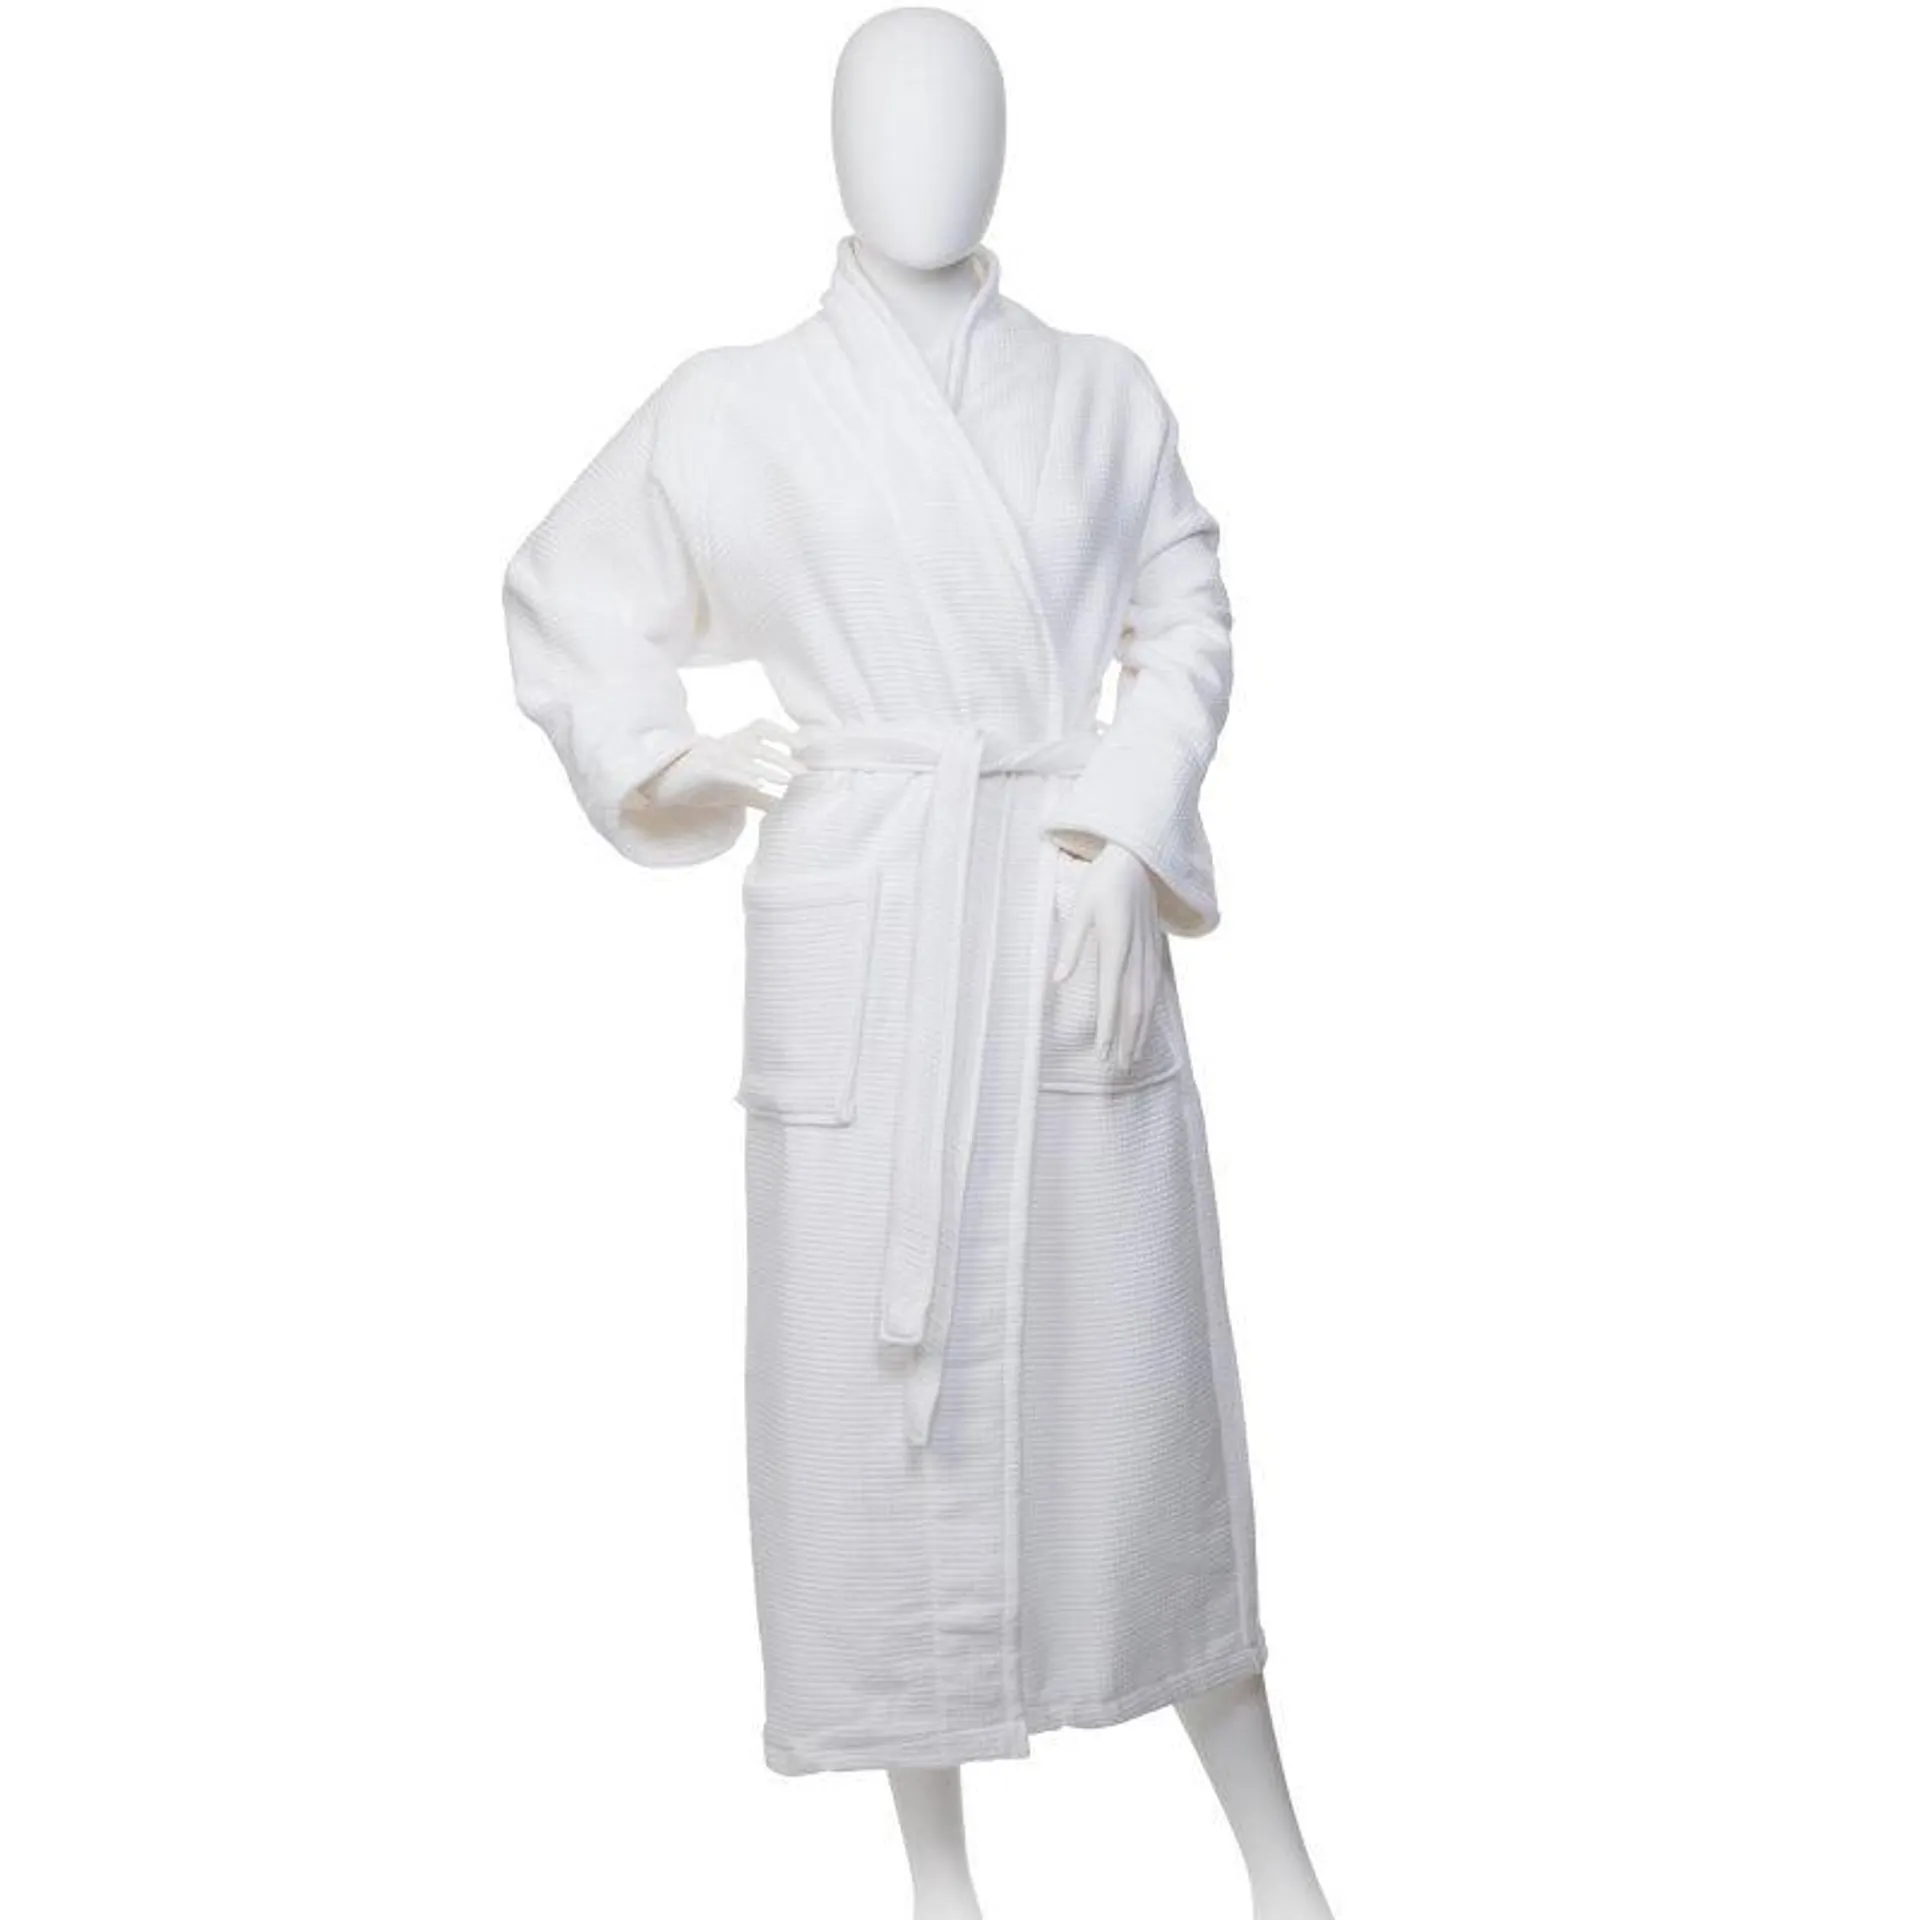 Unisex Adult Waffle Weave Cotton Bath Robe by Blue Nile Mills